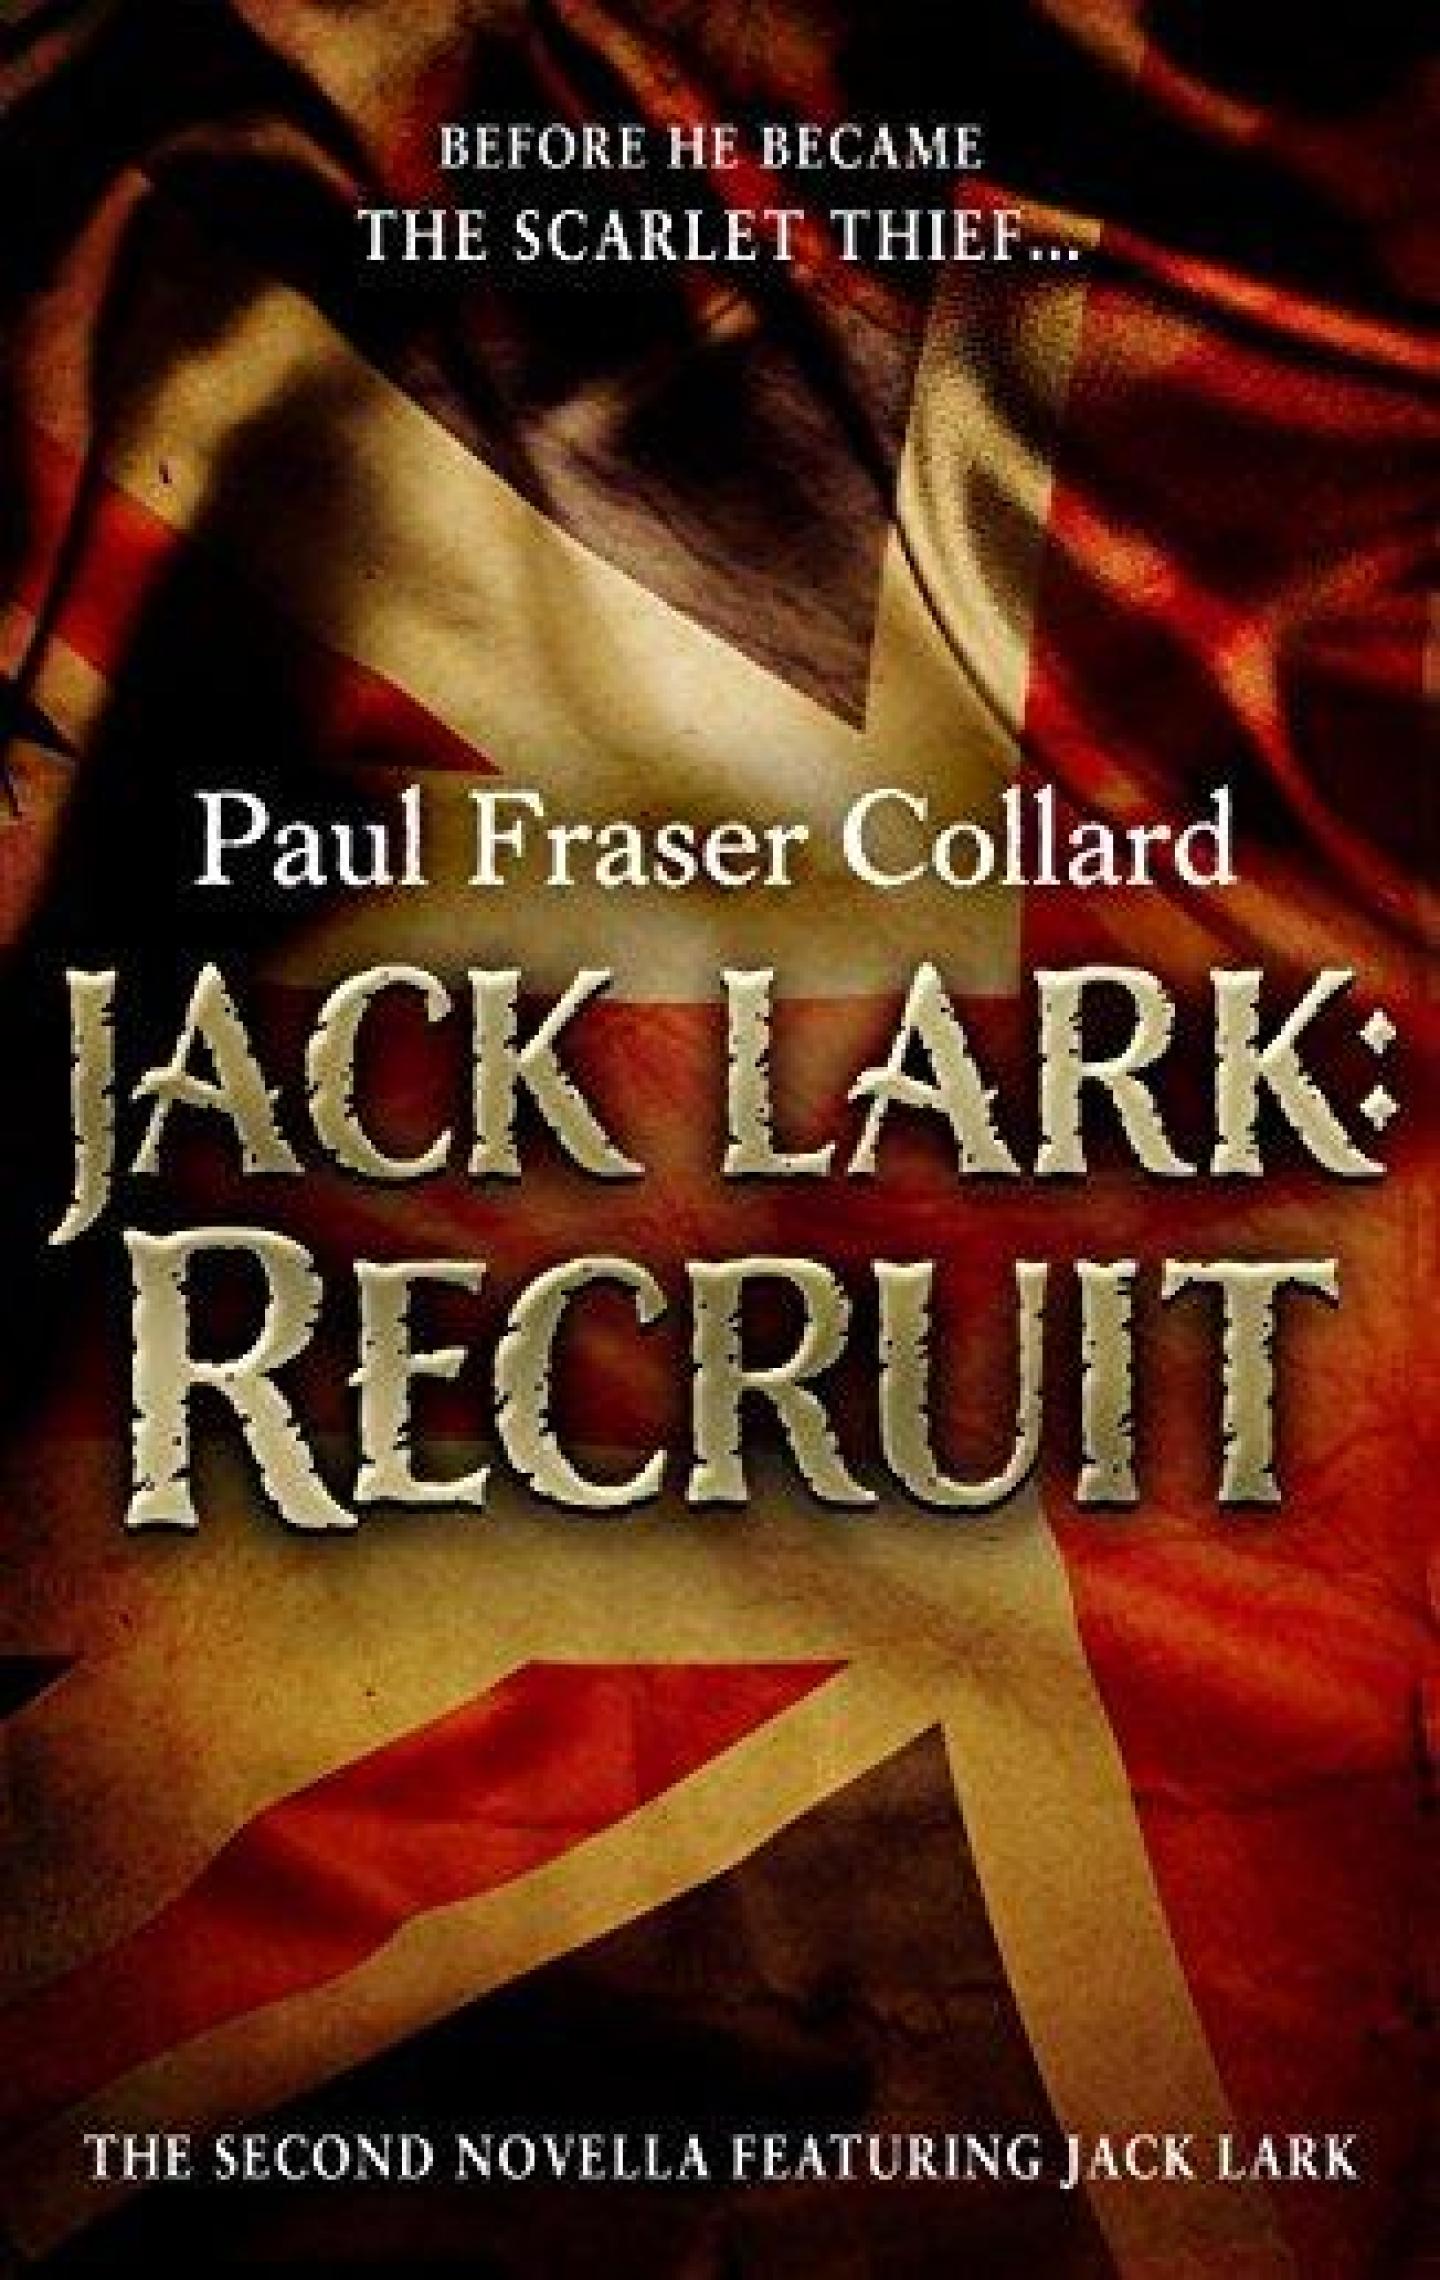 Jack Lark: Recruit